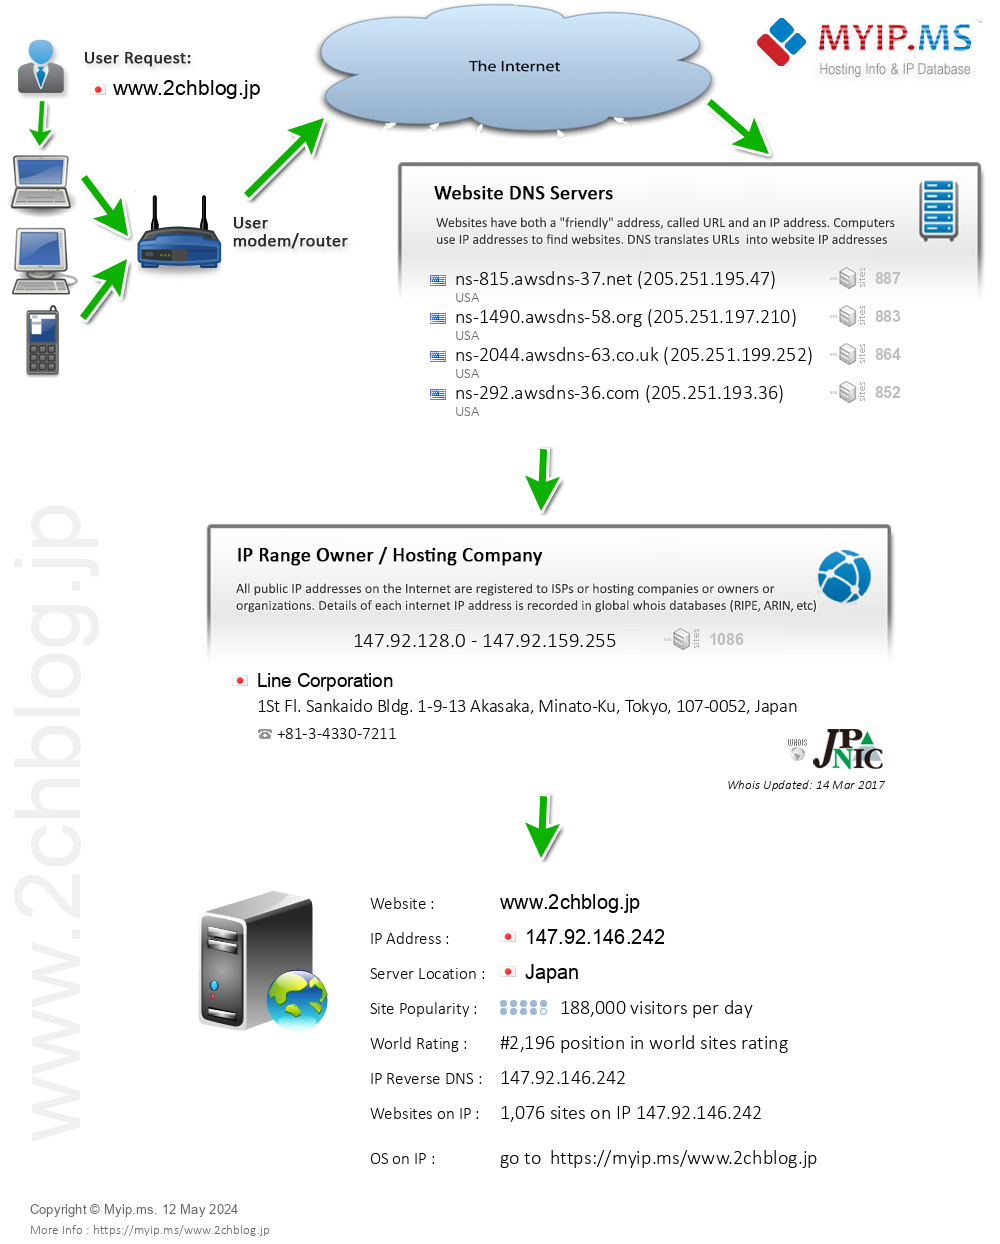 2chblog.jp - Website Hosting Visual IP Diagram